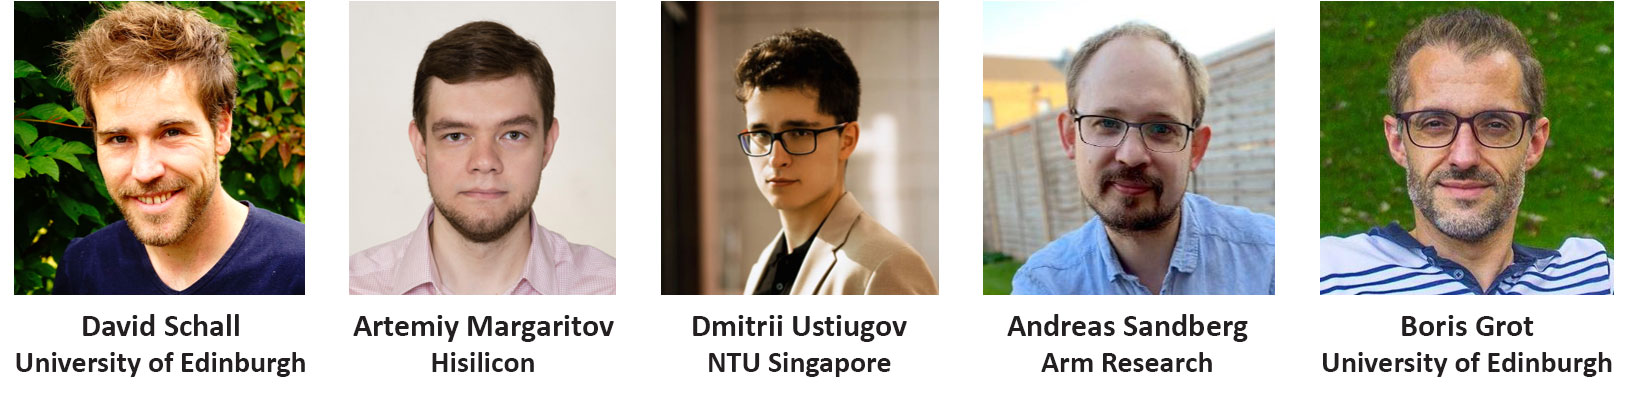 Photo of 5 universities researchers.